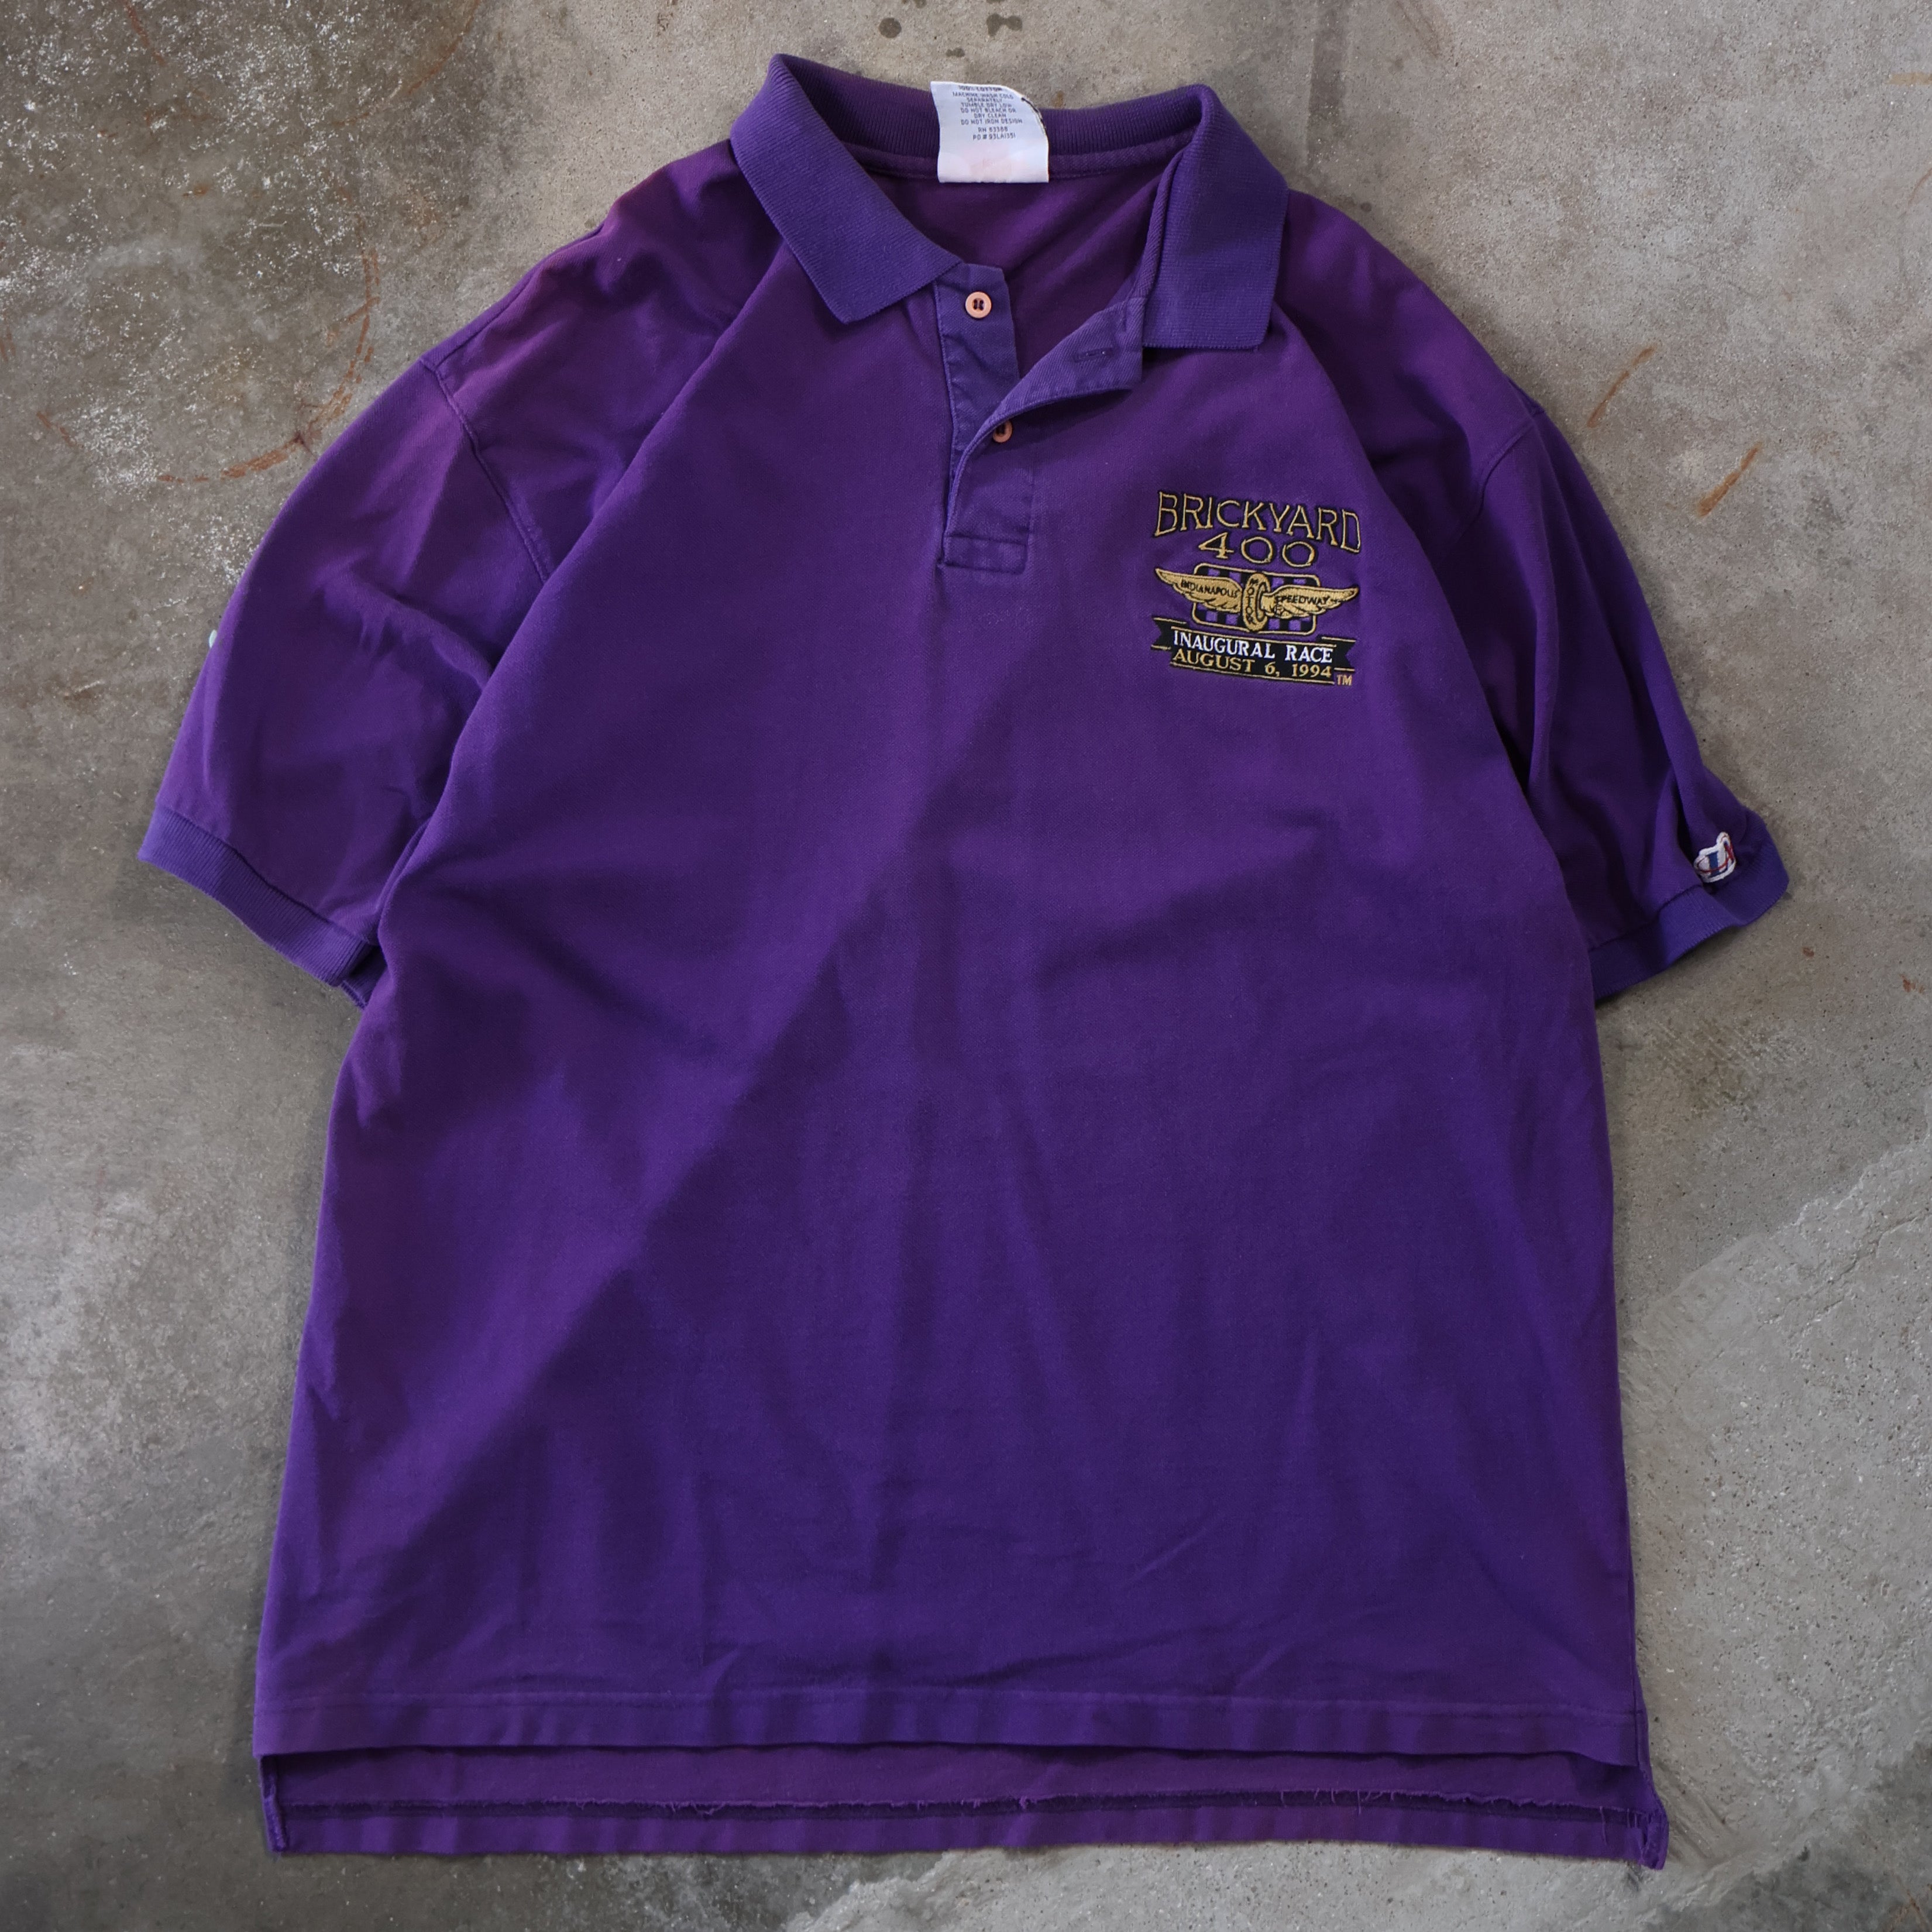 Brickyard 400 Polo T-Shirt 1994 (XL)